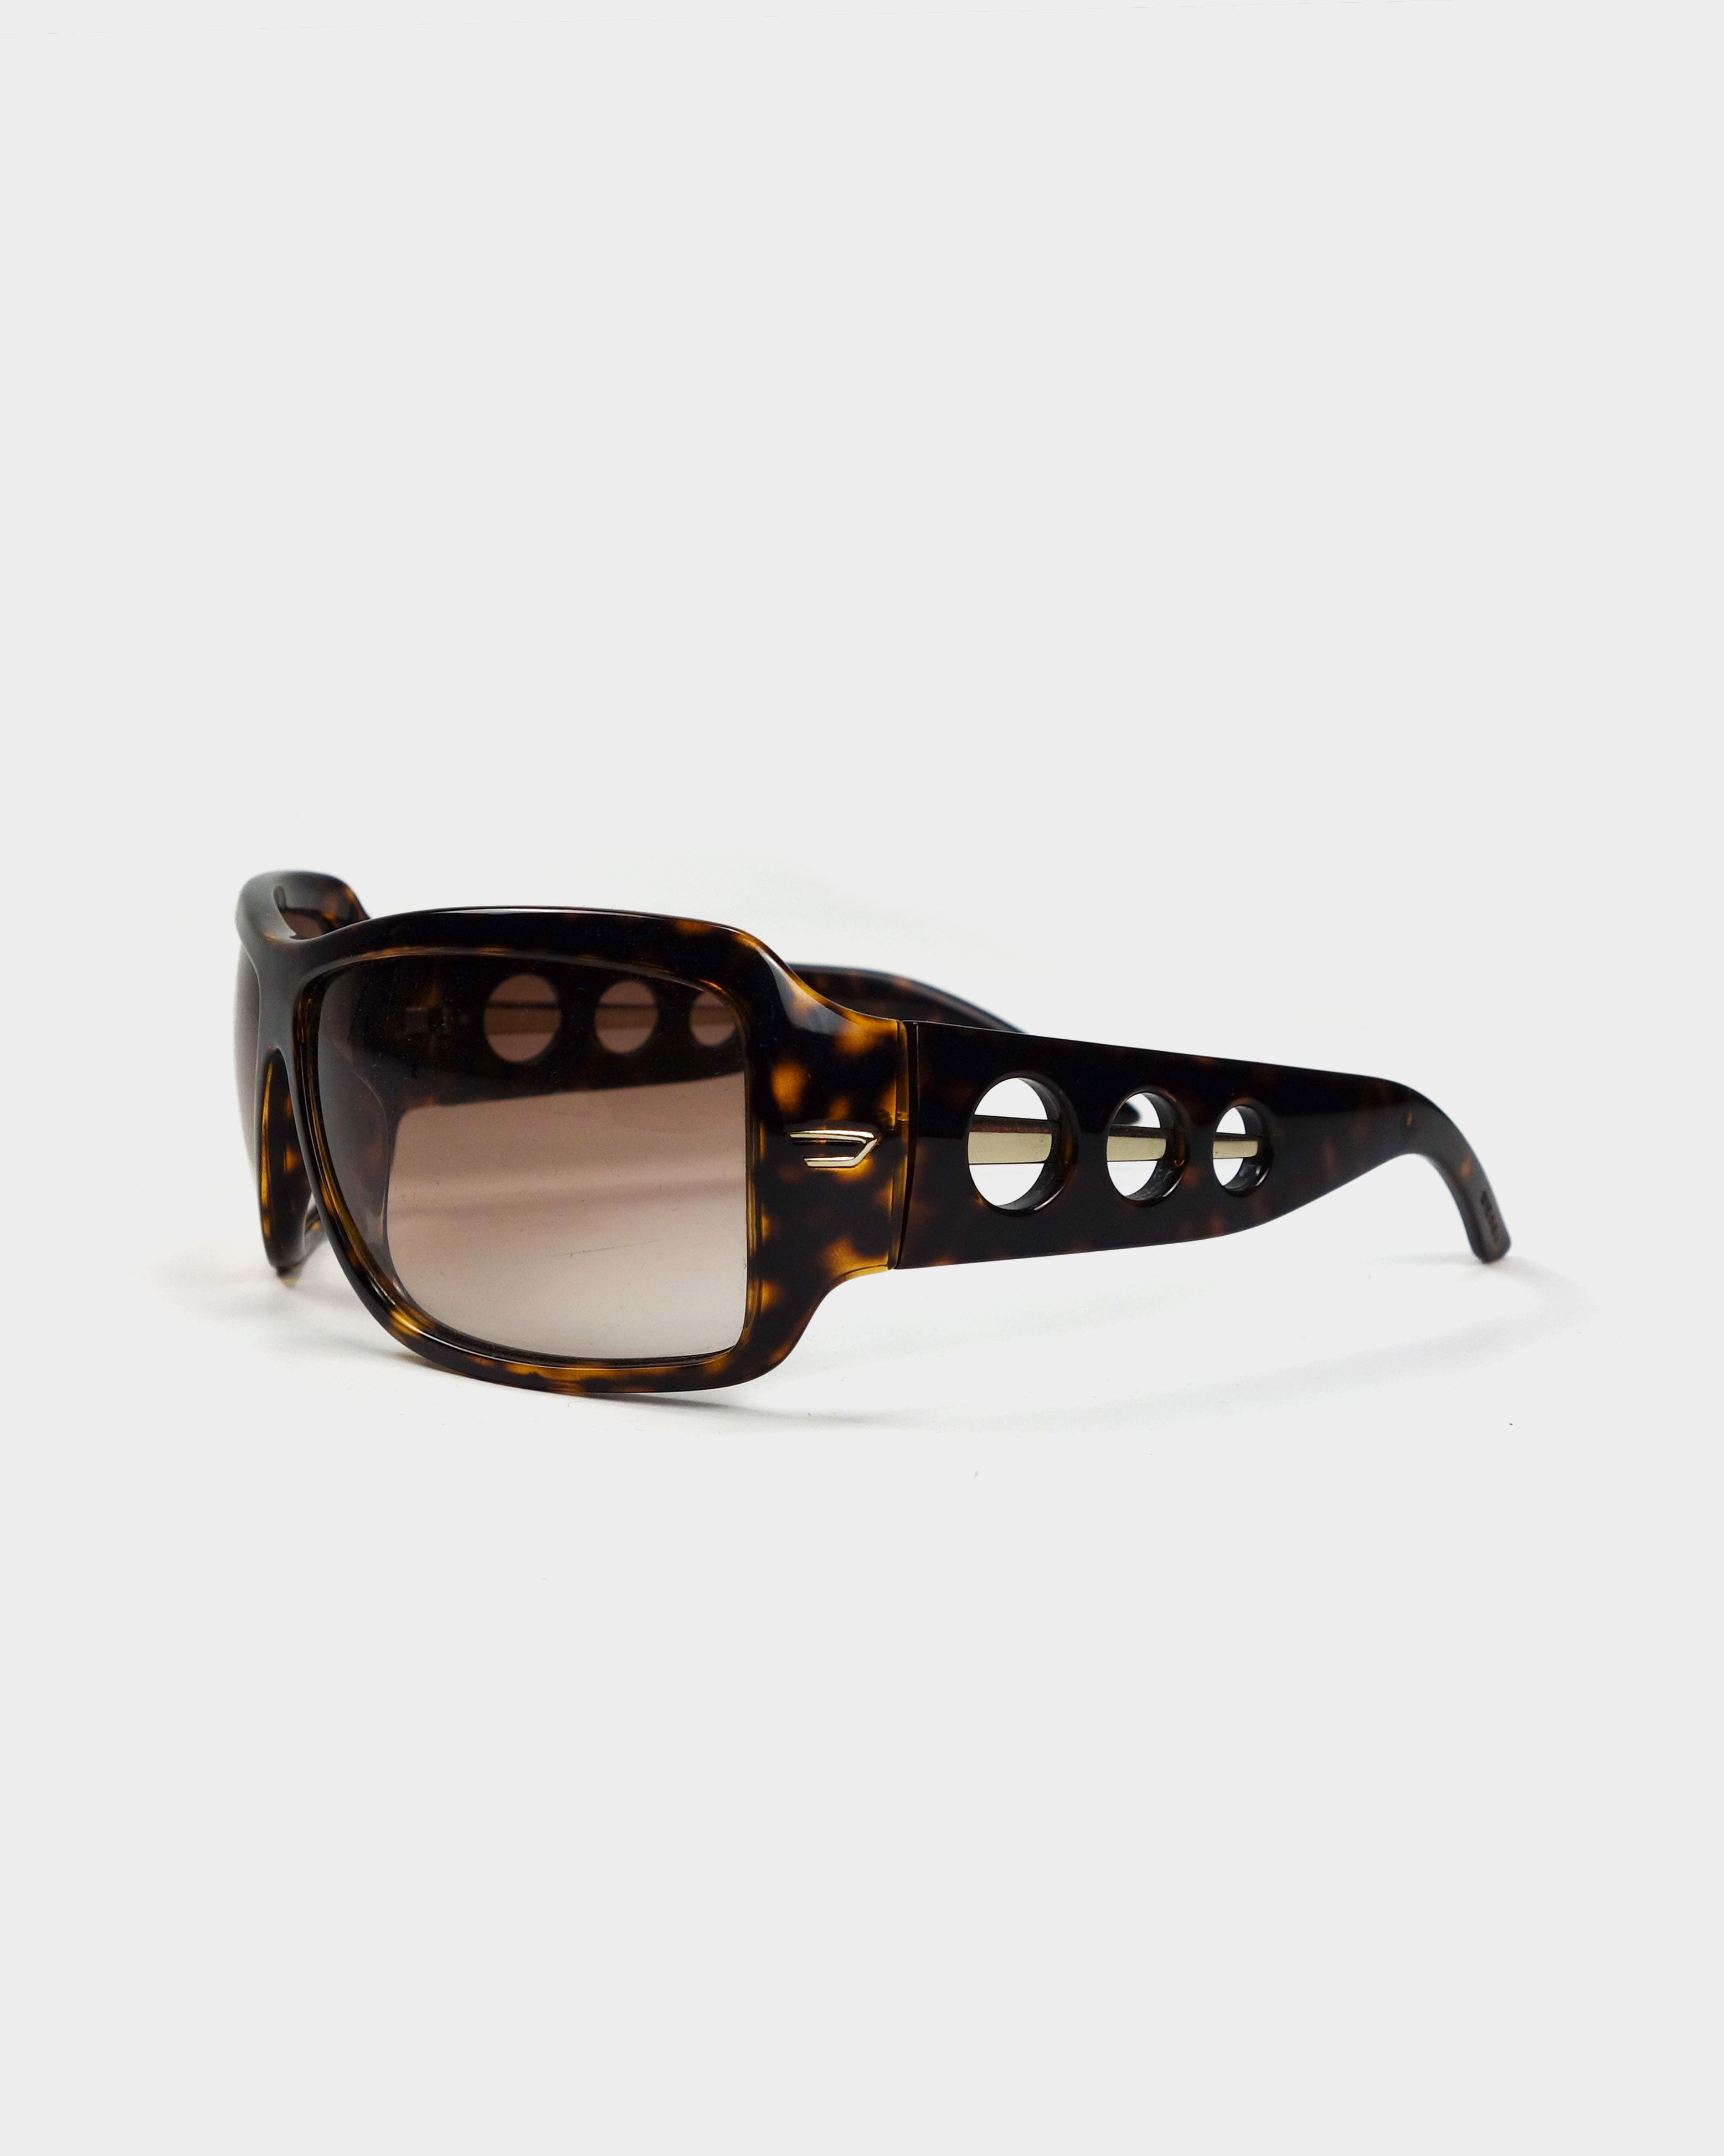 Diesel 00s archive Sunglasses Dロゴ-